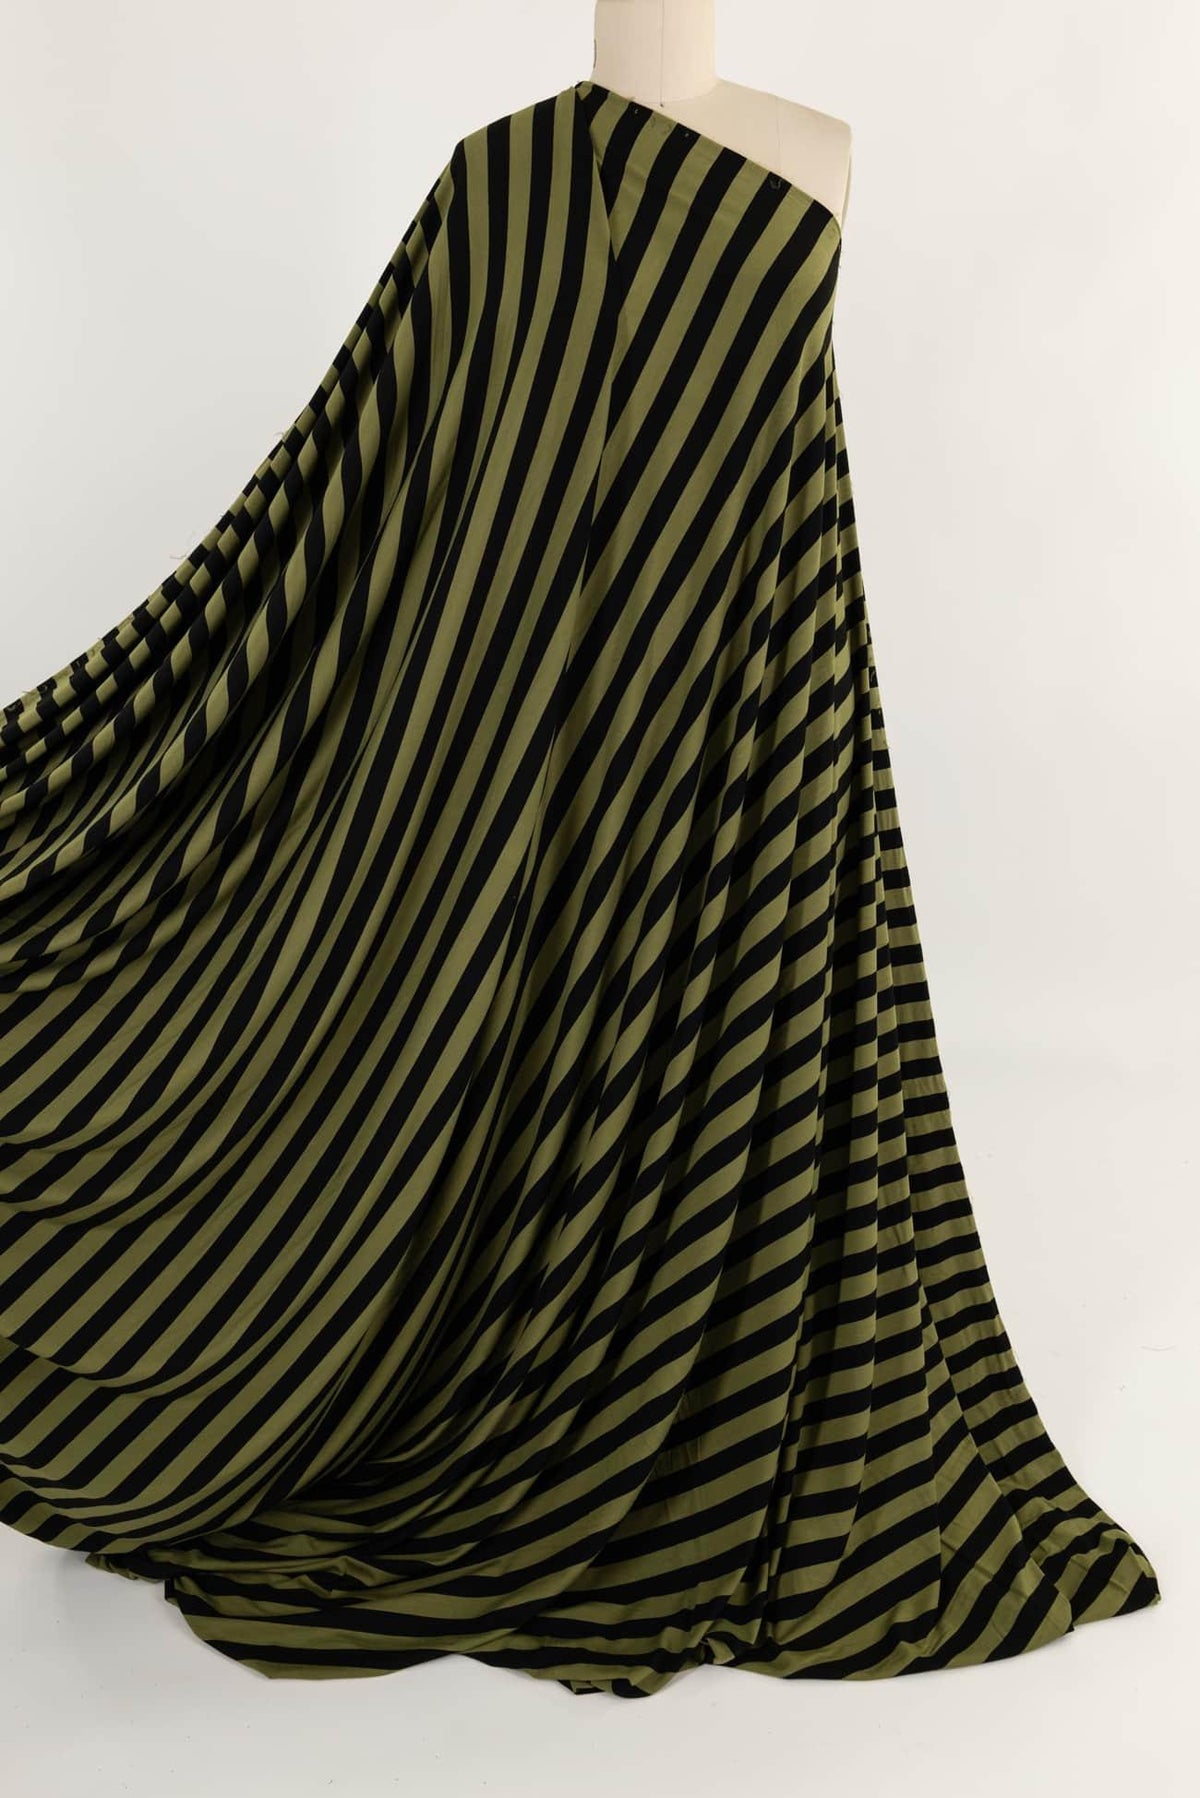 Elvis Stripes USA Knit - Marcy Tilton Fabrics